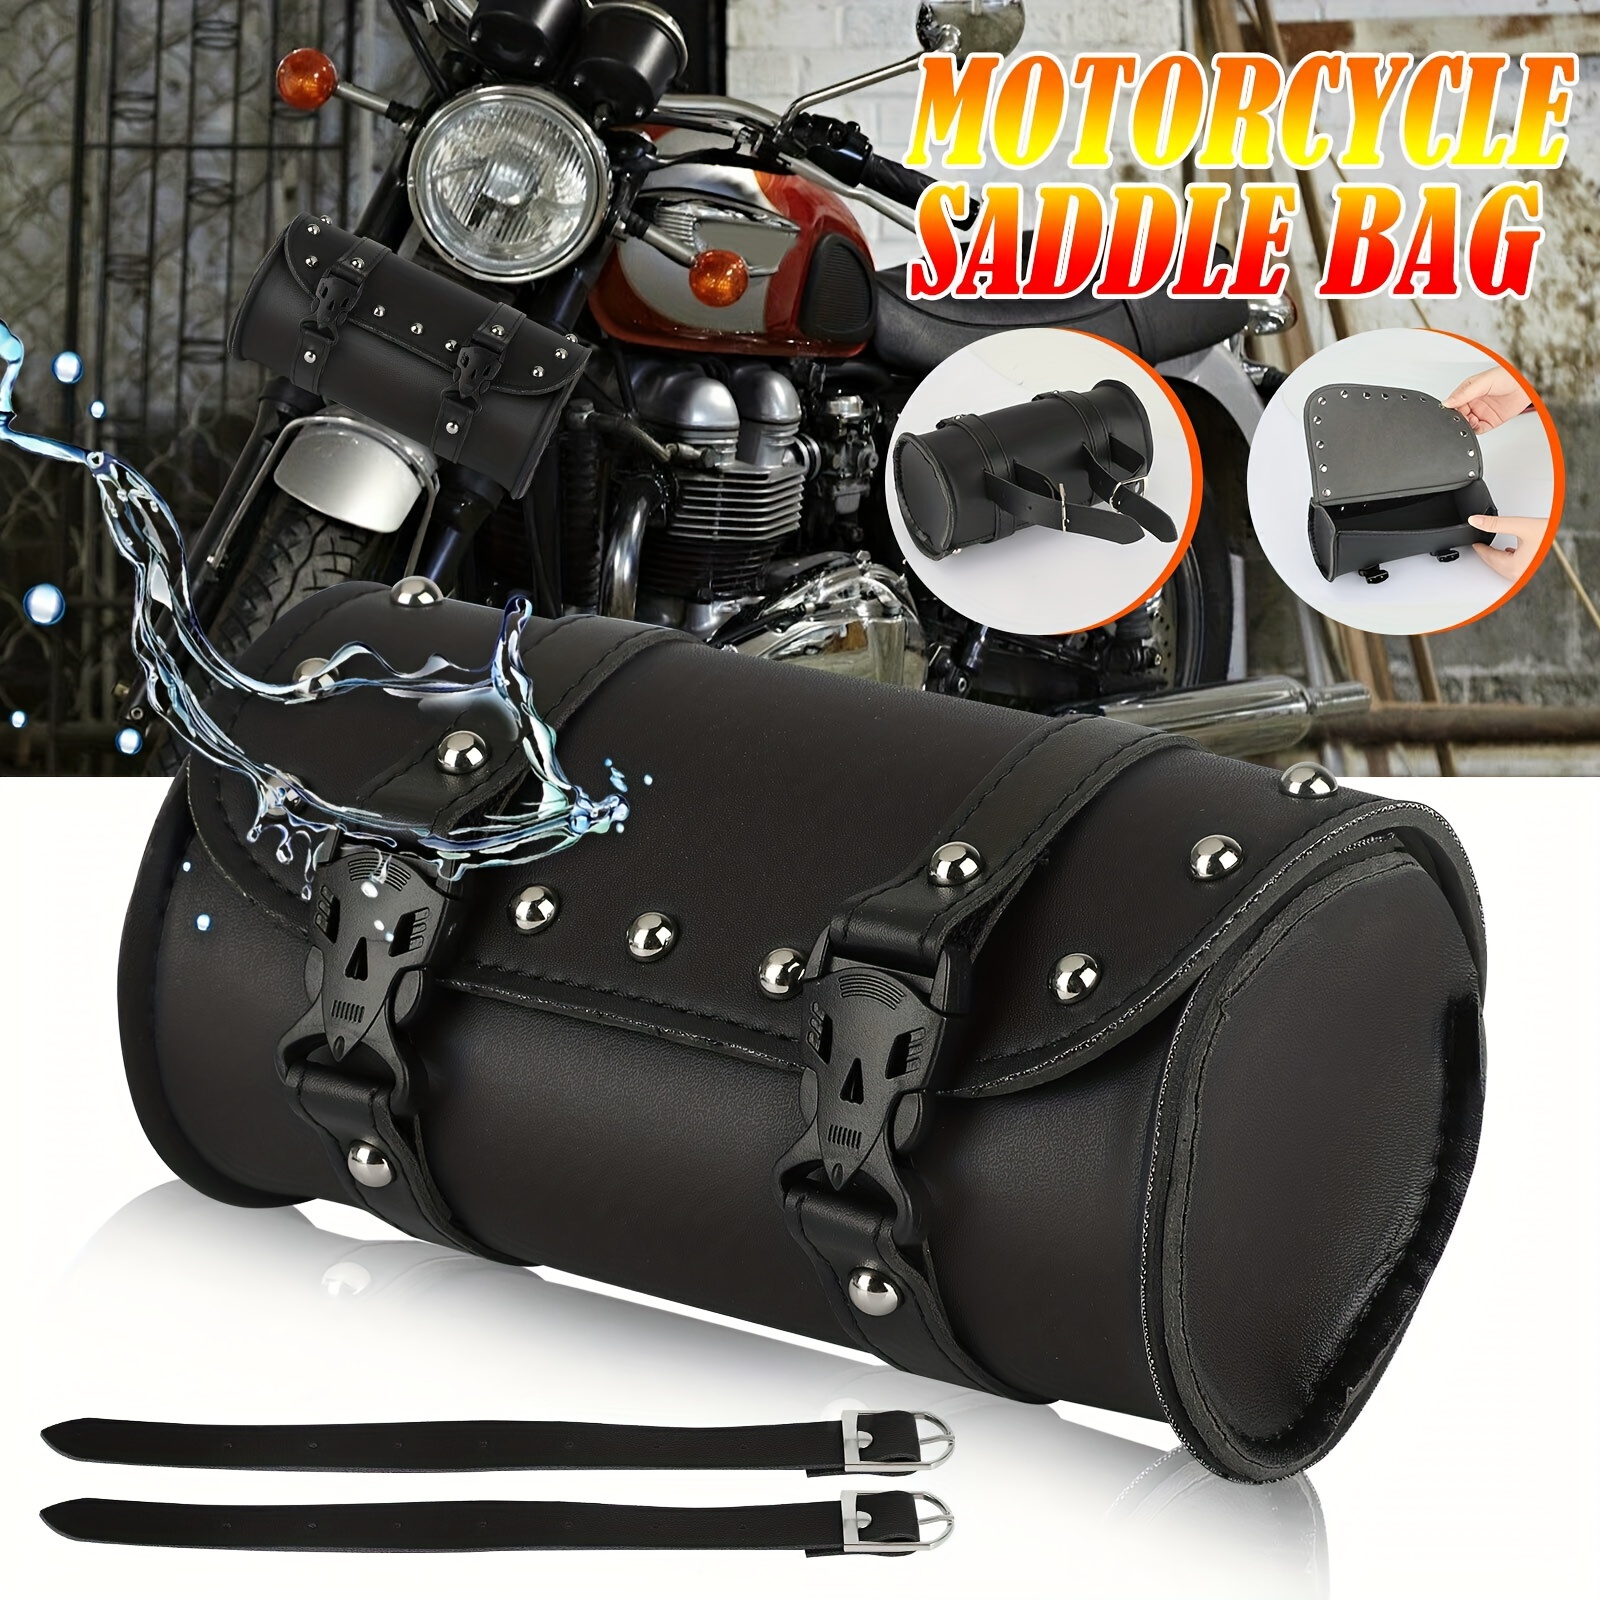 Motocentric Waterproof Motorcycle Tail Bag Multifunction Motorcycle Rear  Seat Bag High Capacity Motorcycle Bag Rider Backpack